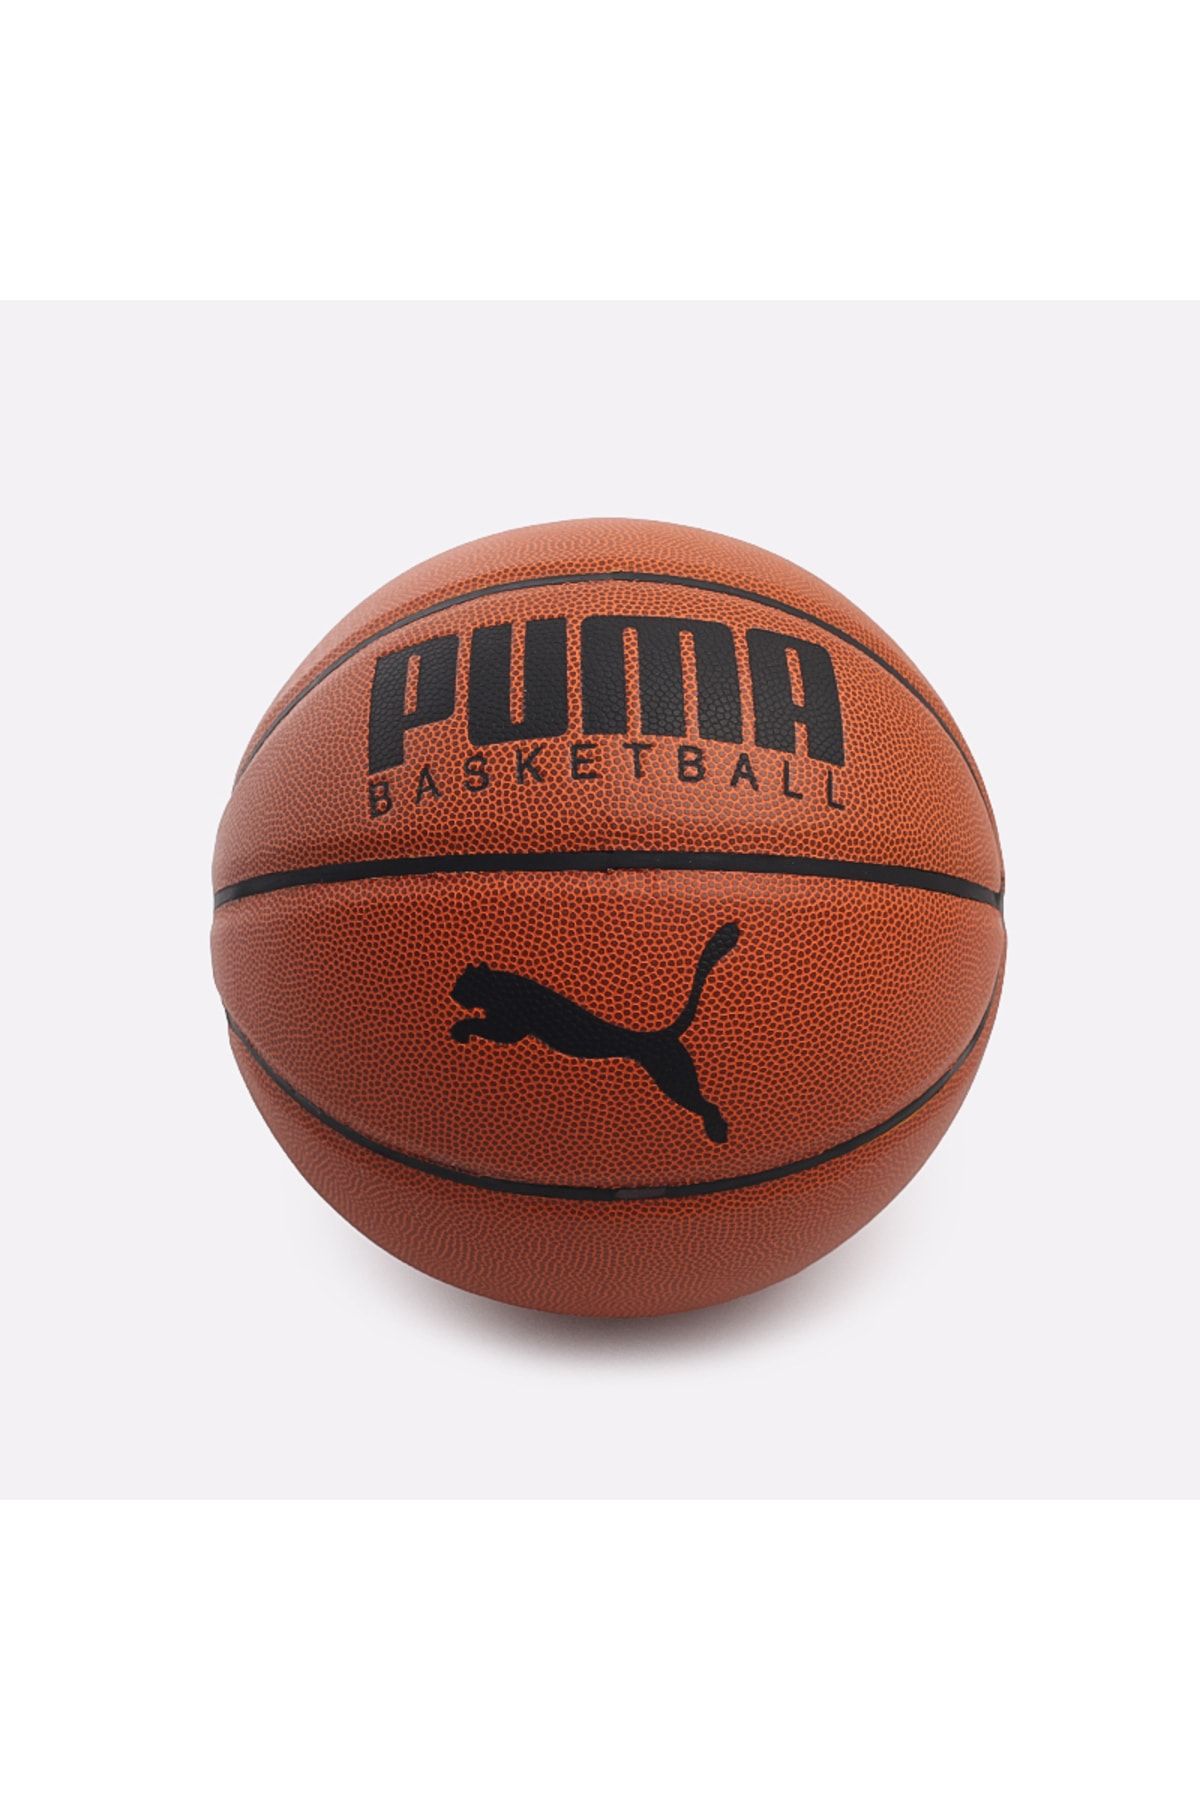 Puma Basketball Top Leather Brown- B